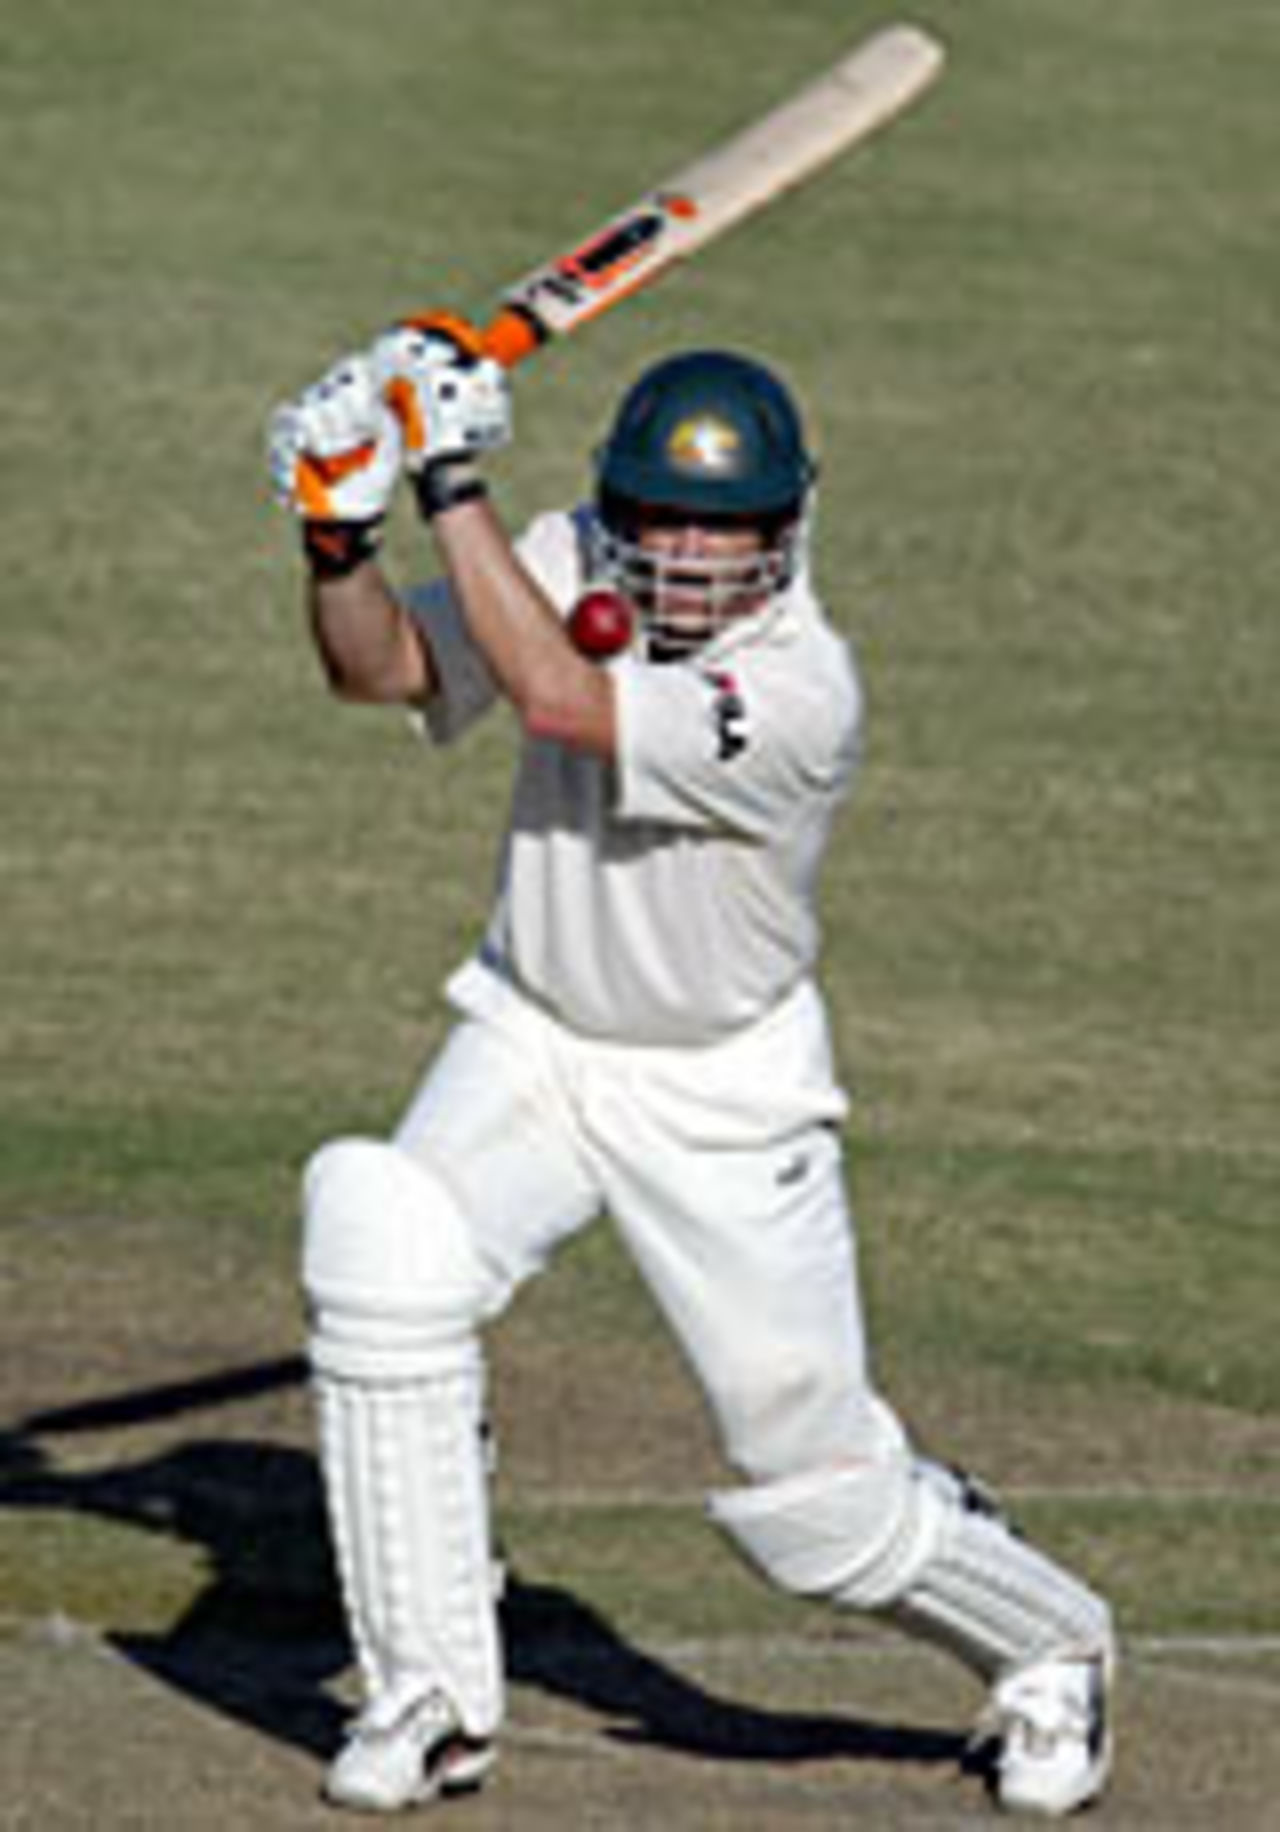 Adam Gilchrist drives during his innings of 80, Australia v Sri Lanka, Darwin, July 2, 2004